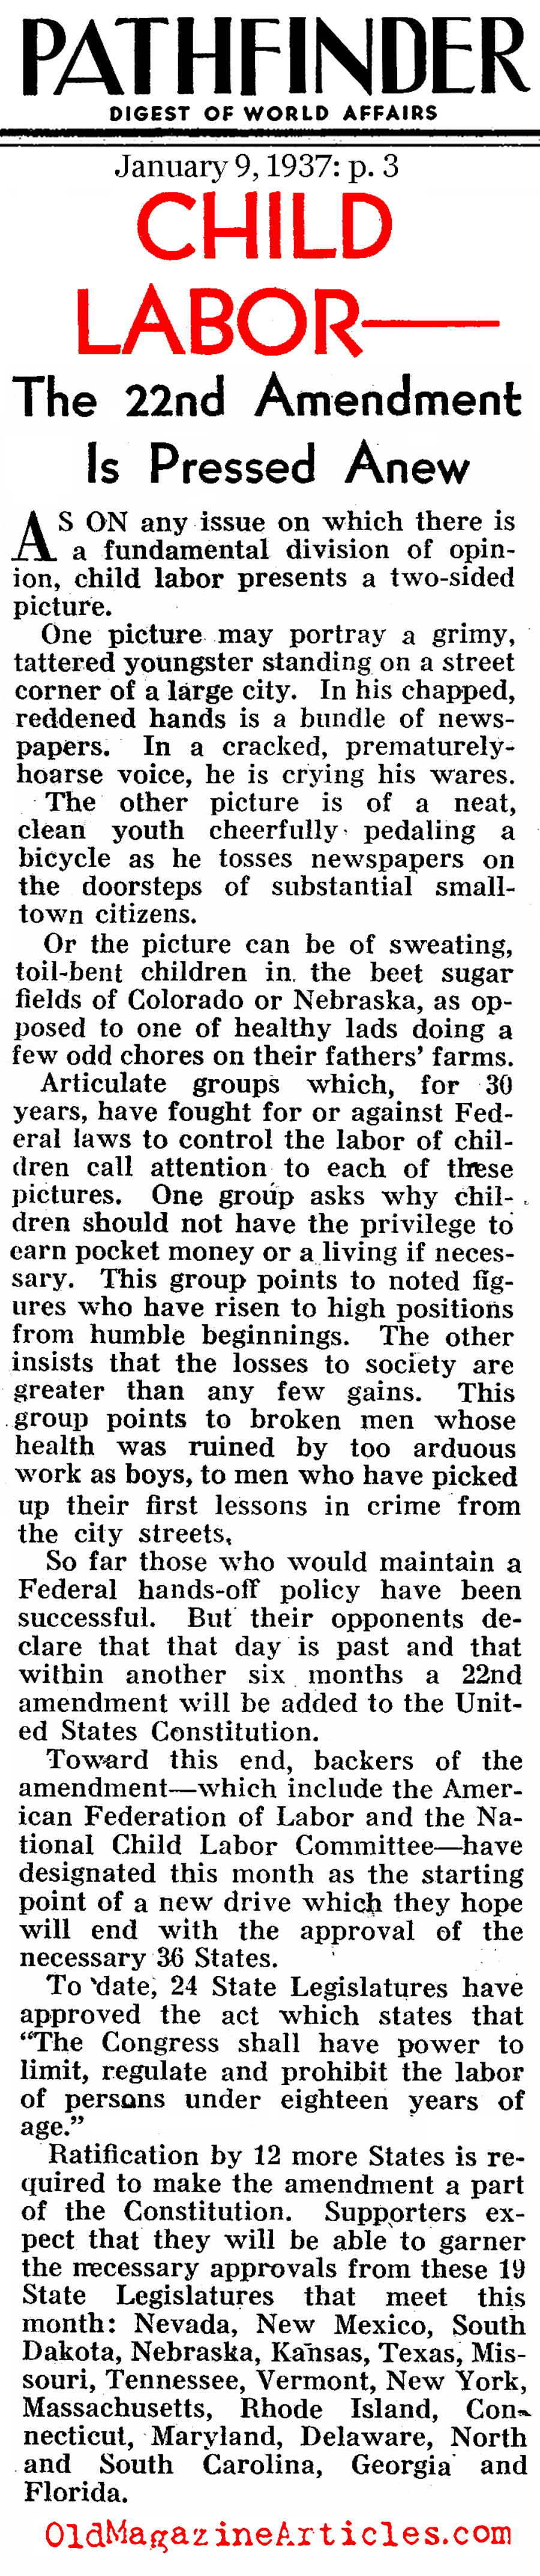 Putting An End To Child Labor (Pathfinder Magazine, 1937)